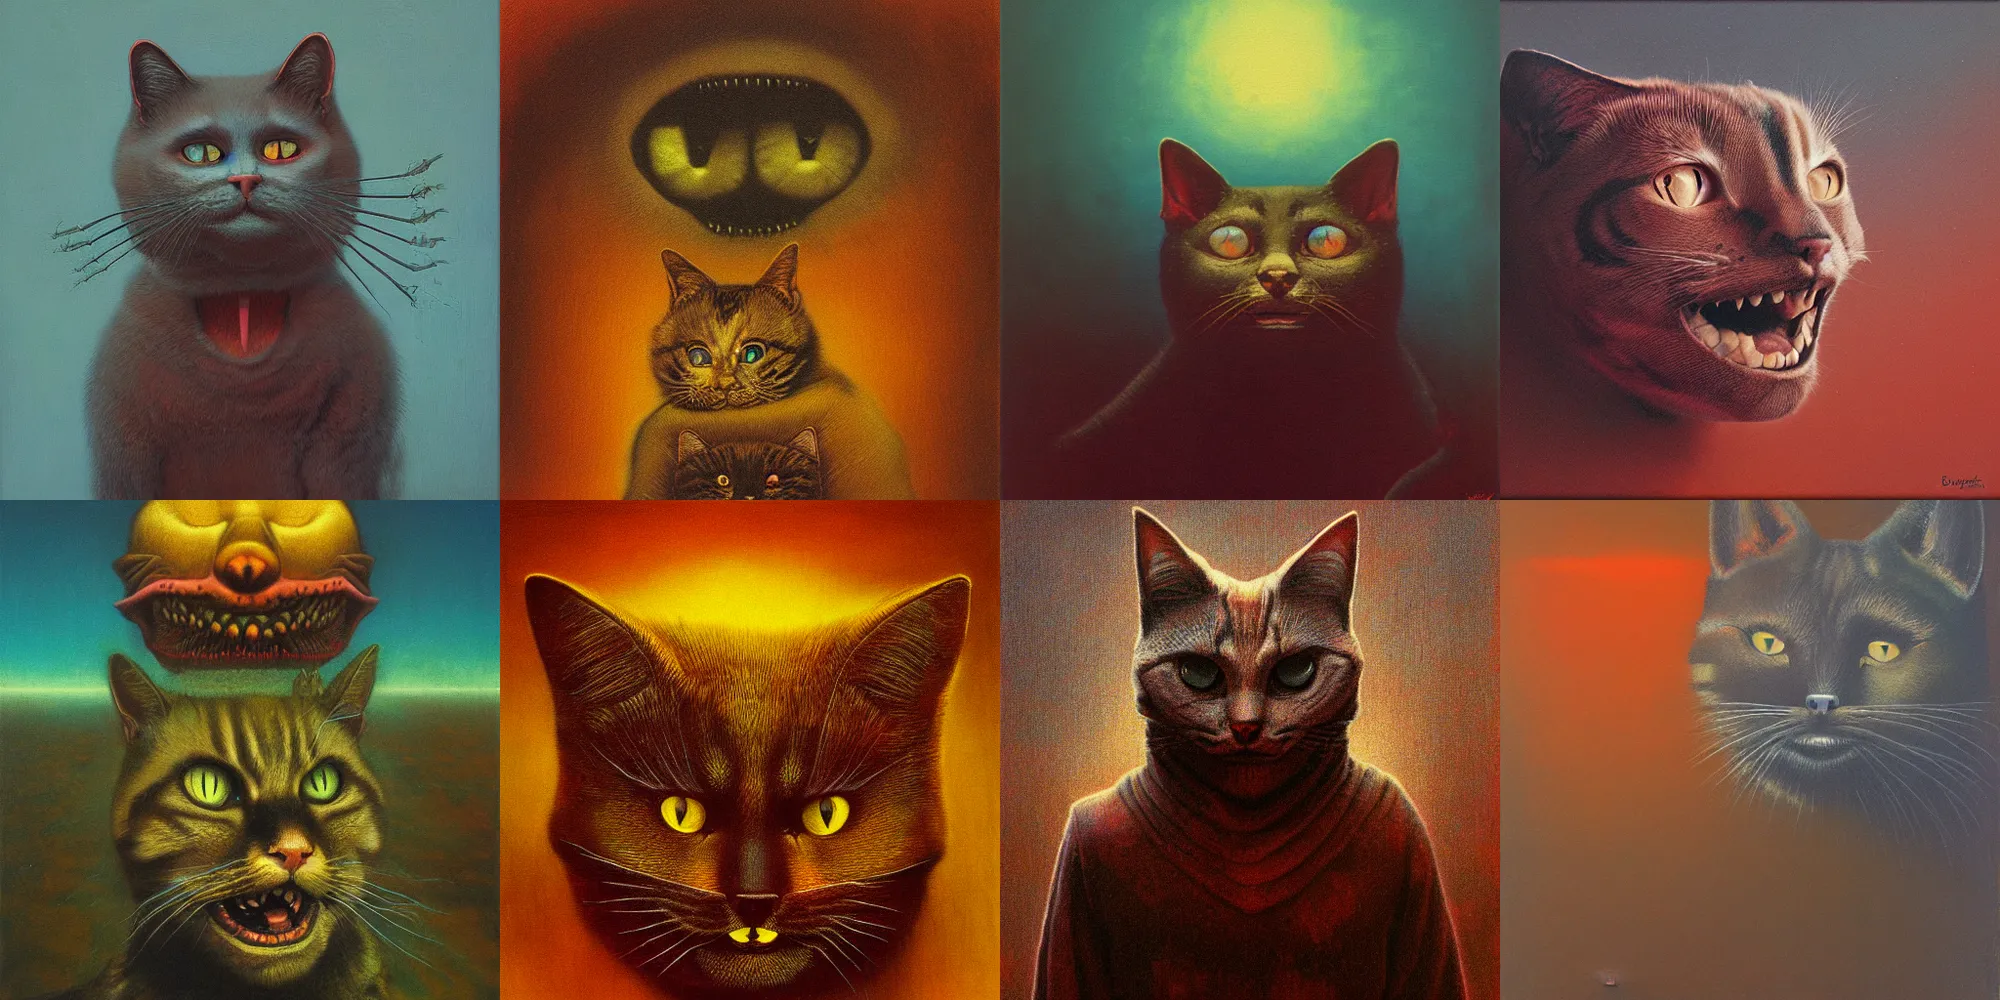 Image similar to grinning evil cat, HD, award winning, in style of beksinski, film grain, medium format, 8k resolution, oil on canvas